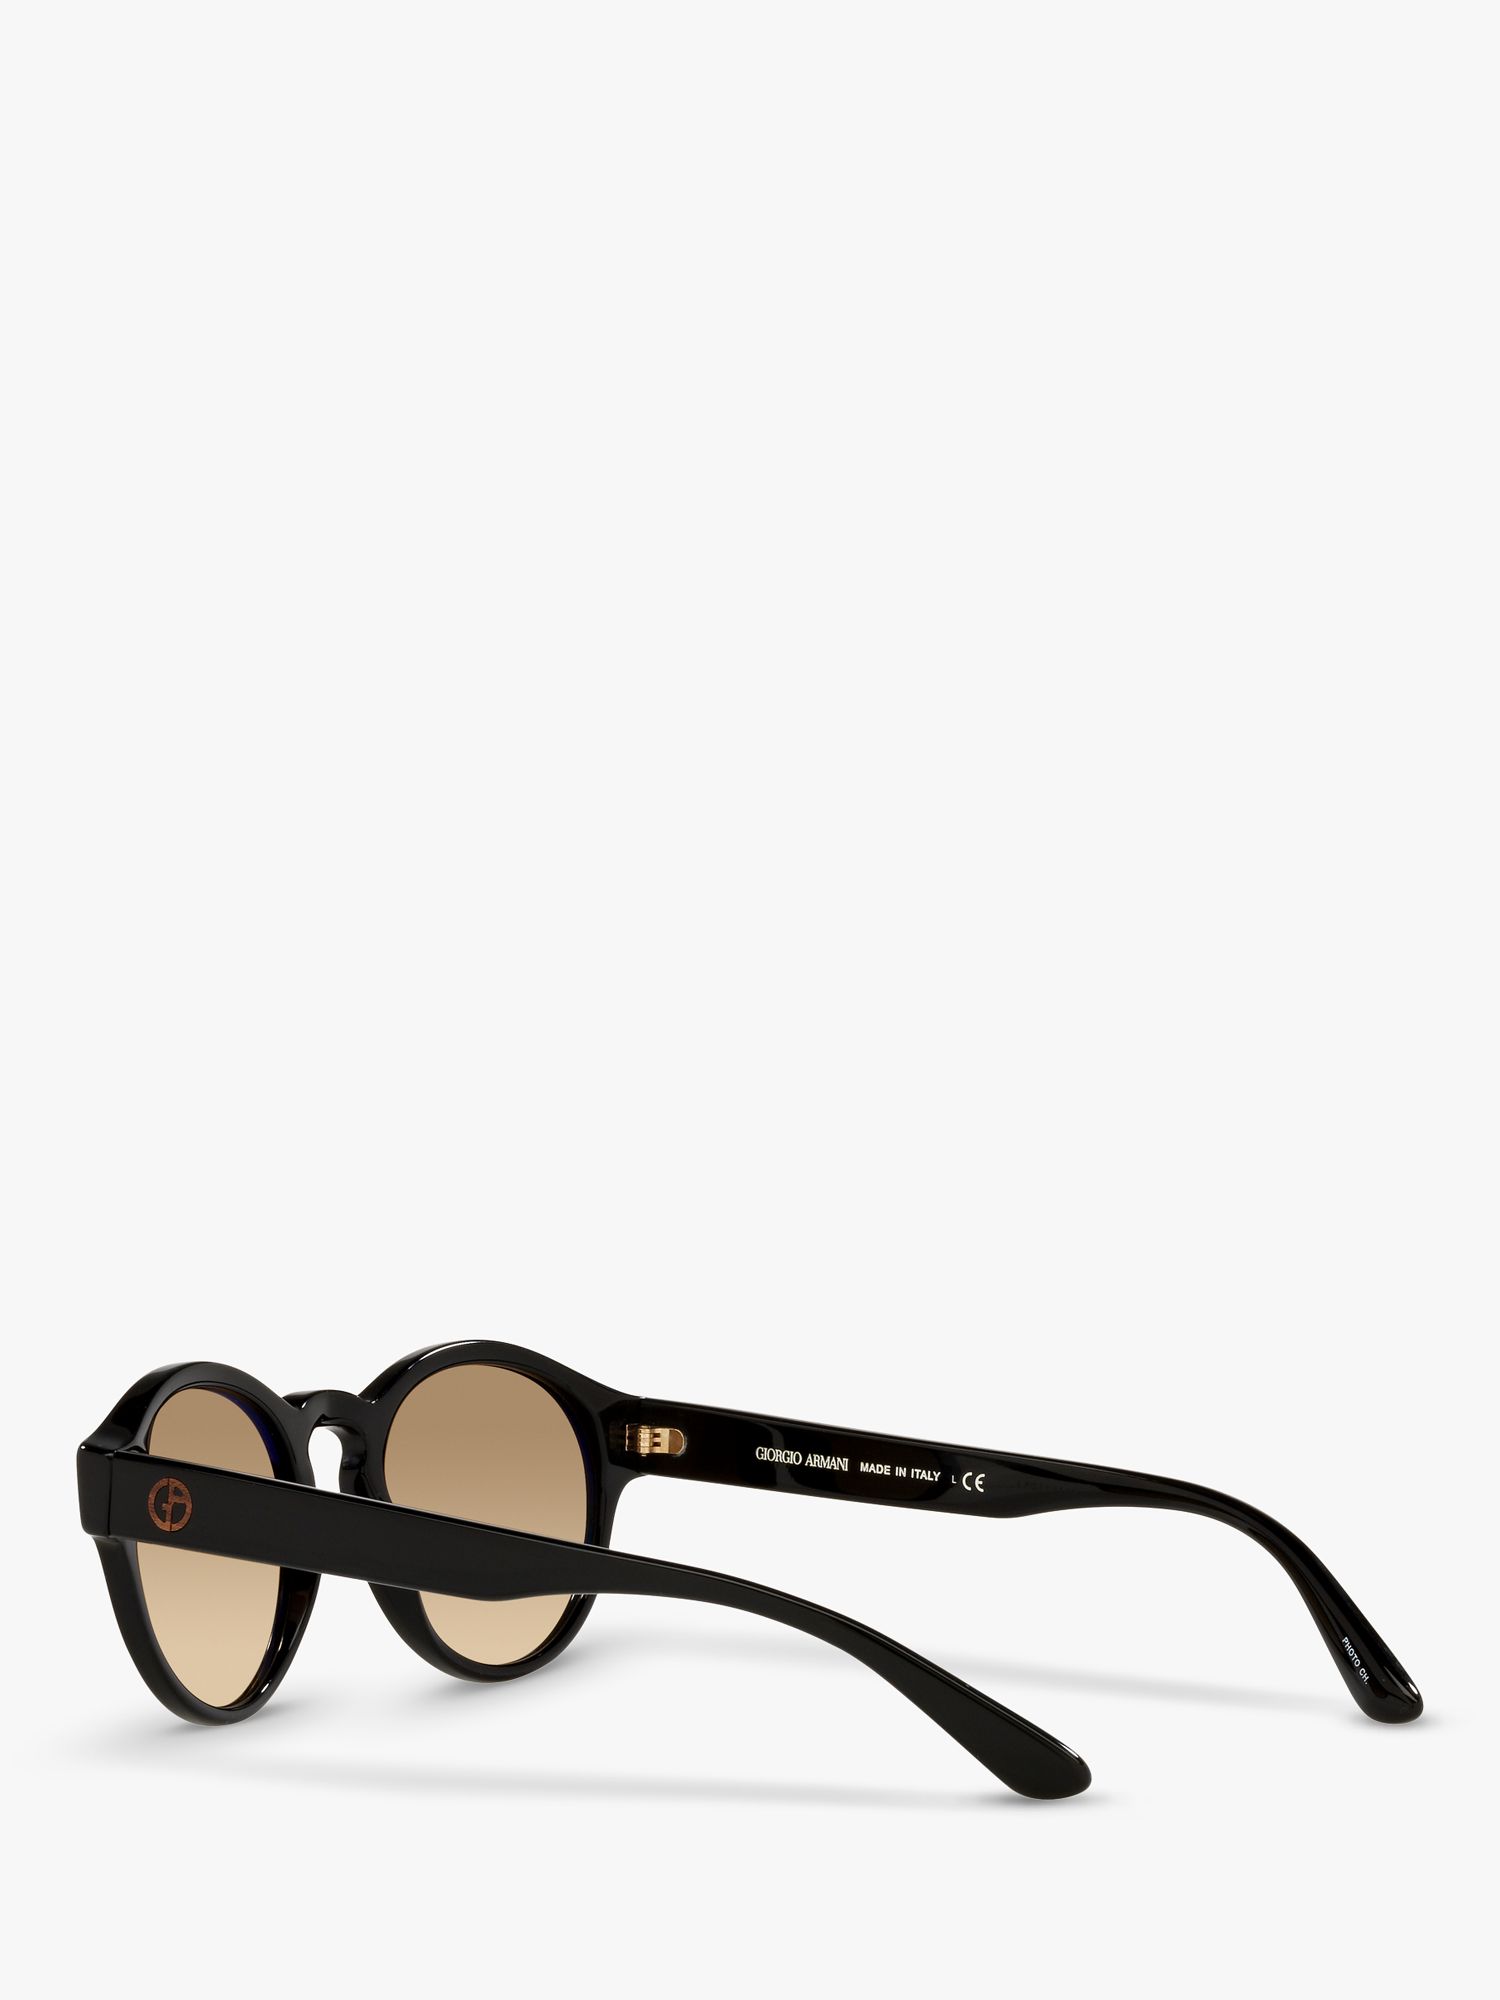 Giorgio Armani AR8146 Women's Oval Sunglasses, Black/Beige Gradient at John  Lewis & Partners